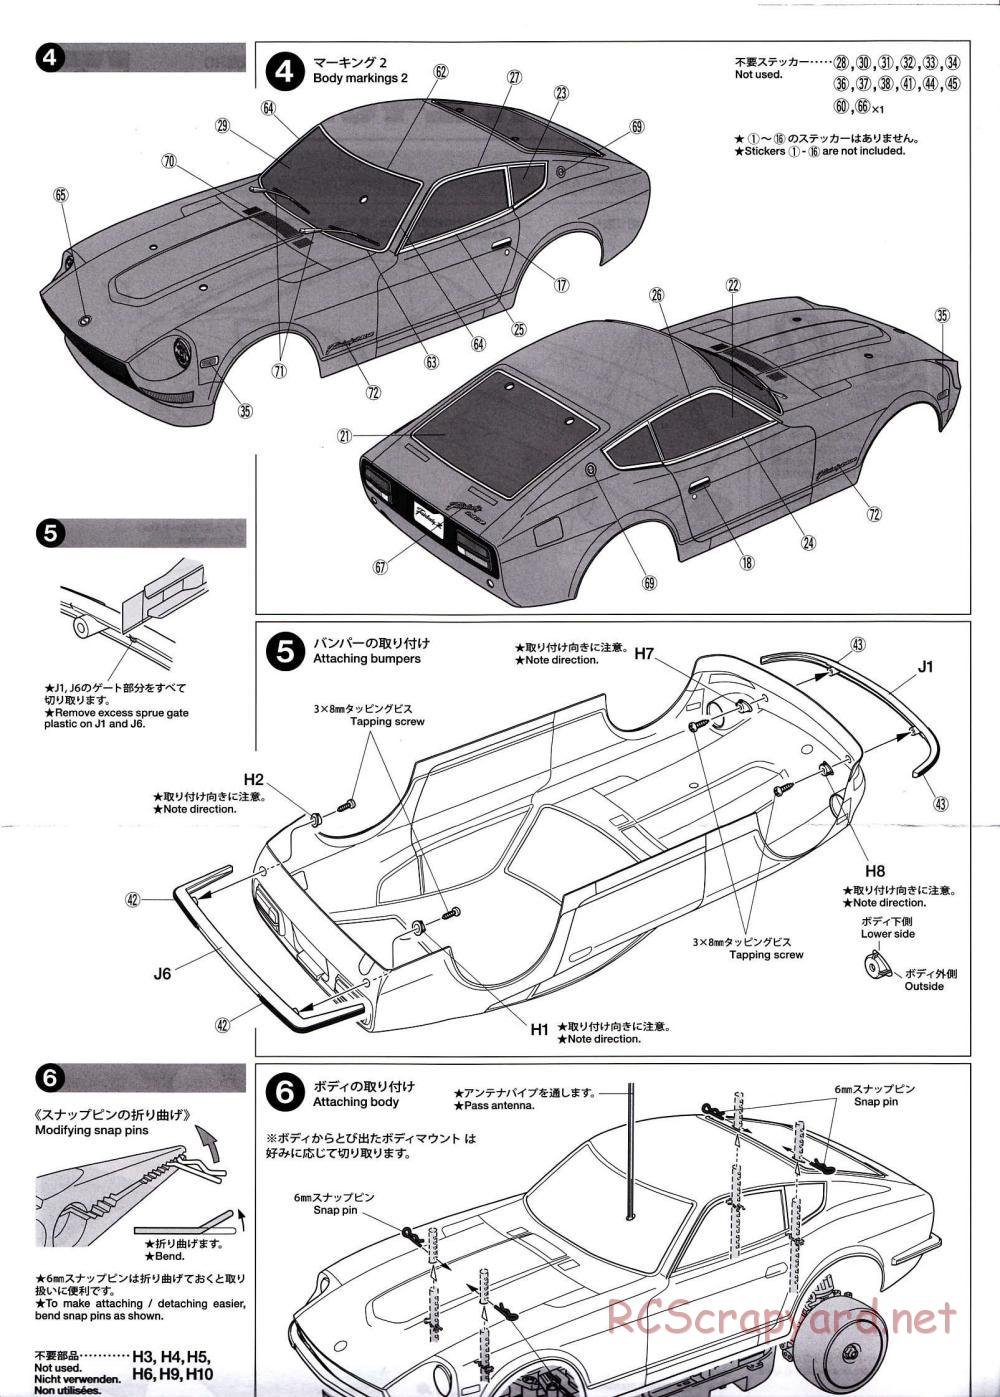 Tamiya - Datsun 240Z - Drift Spec - TT-01ED Chassis - Body Manual - Page 3